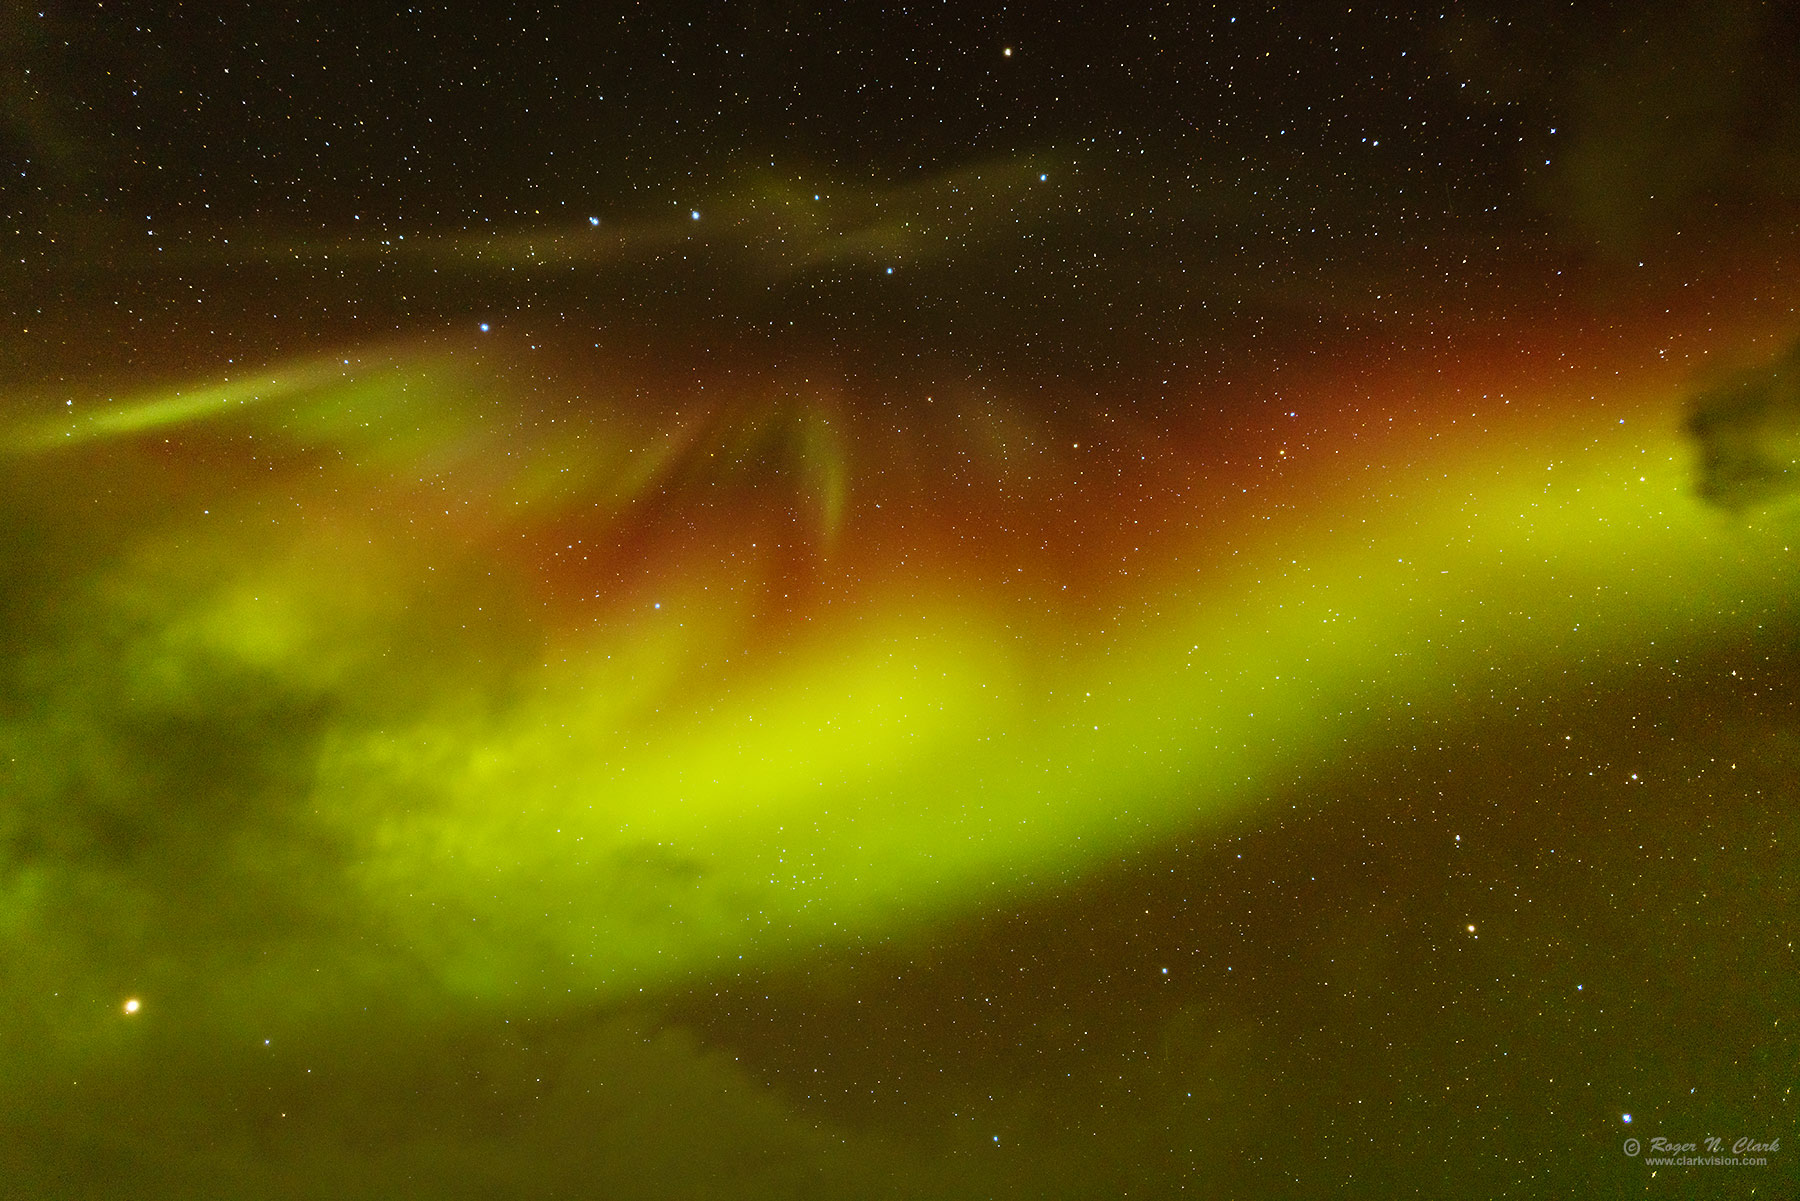 image aurora-c03.23-24.2022-alaska-rnclark-4C3A5443.b-1800s.jpg is Copyrighted by Roger N. Clark, www.clarkvision.com